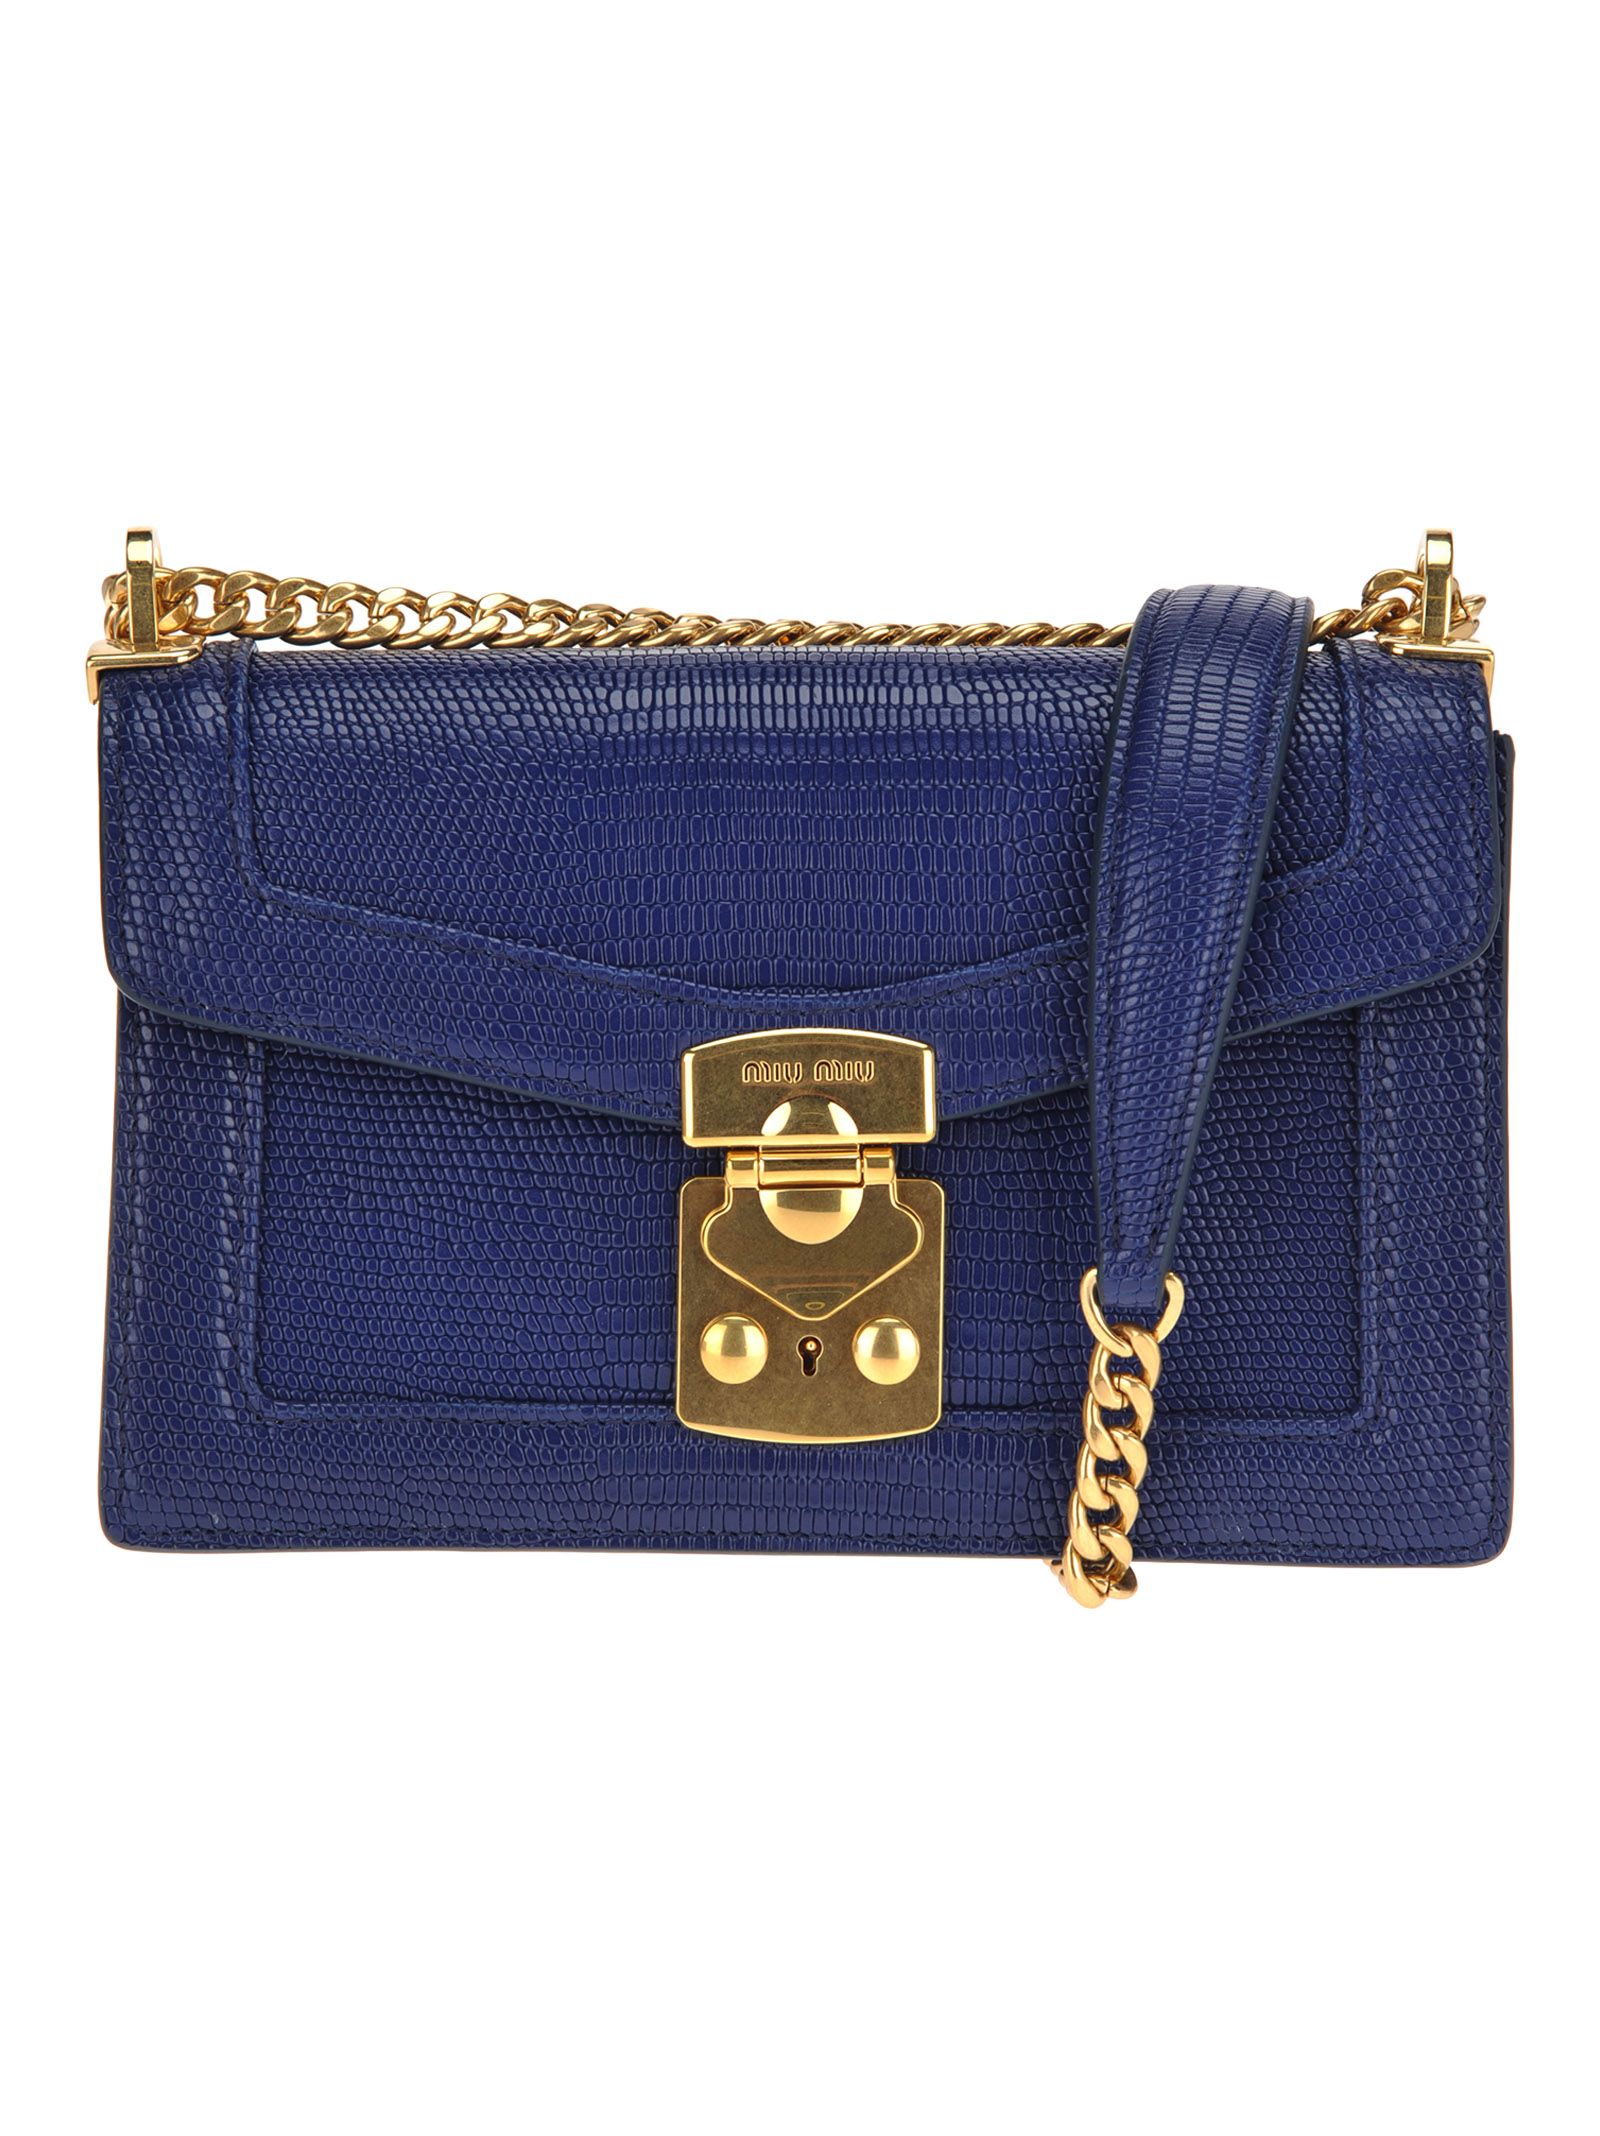 Miu Miu Confidential Crossbody Bag In Blue Ink | ModeSens